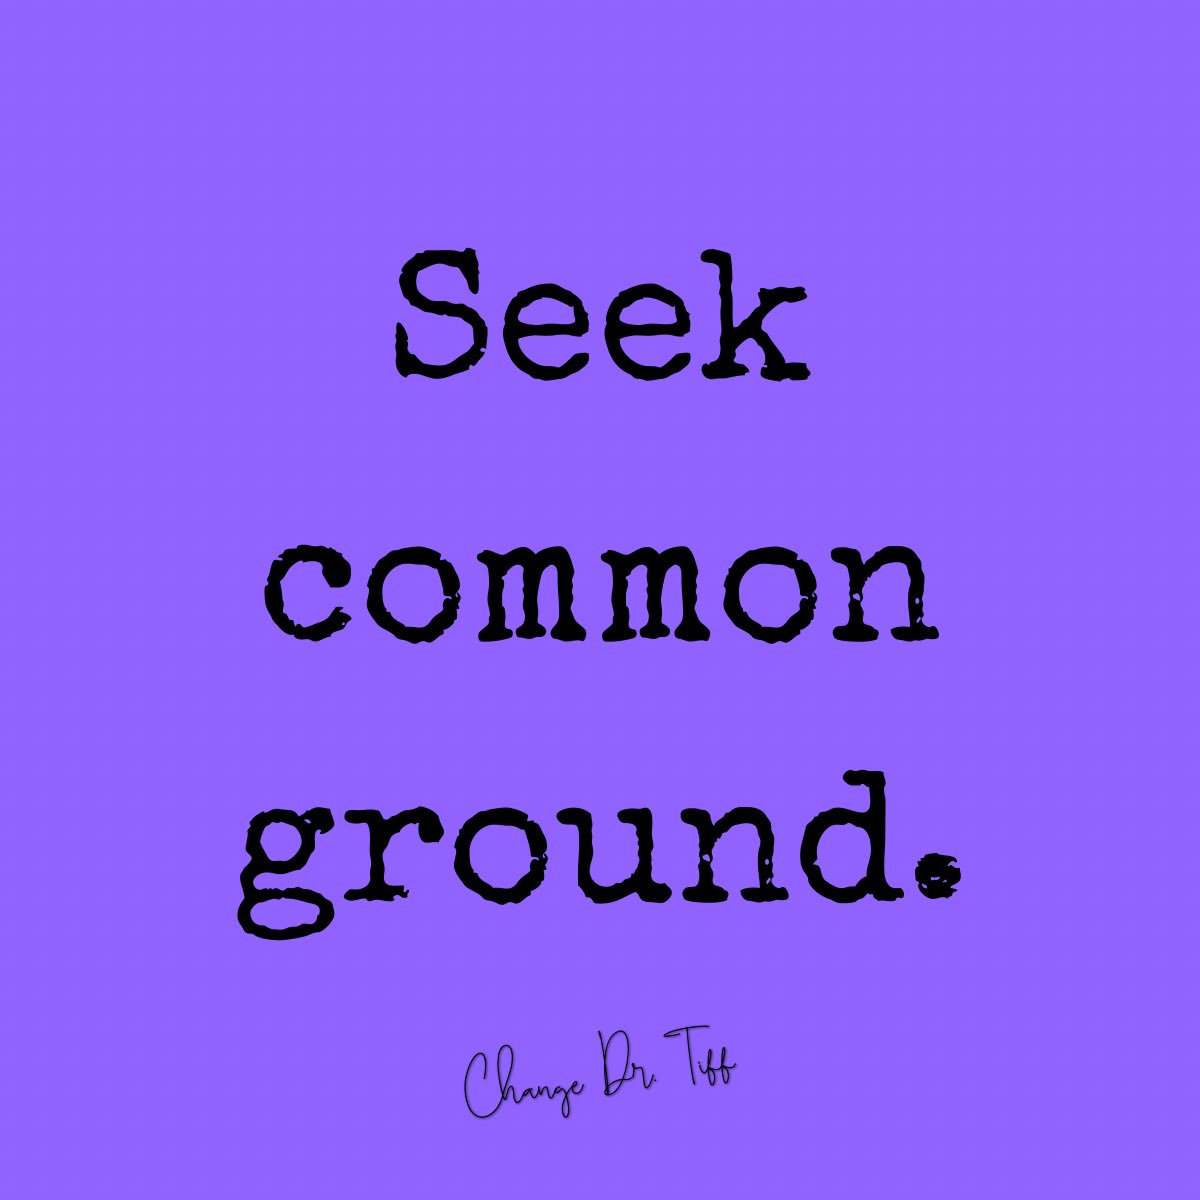 Seek common ground to bridge communication gaps.

#BeTheChange #ChangeDrTiff